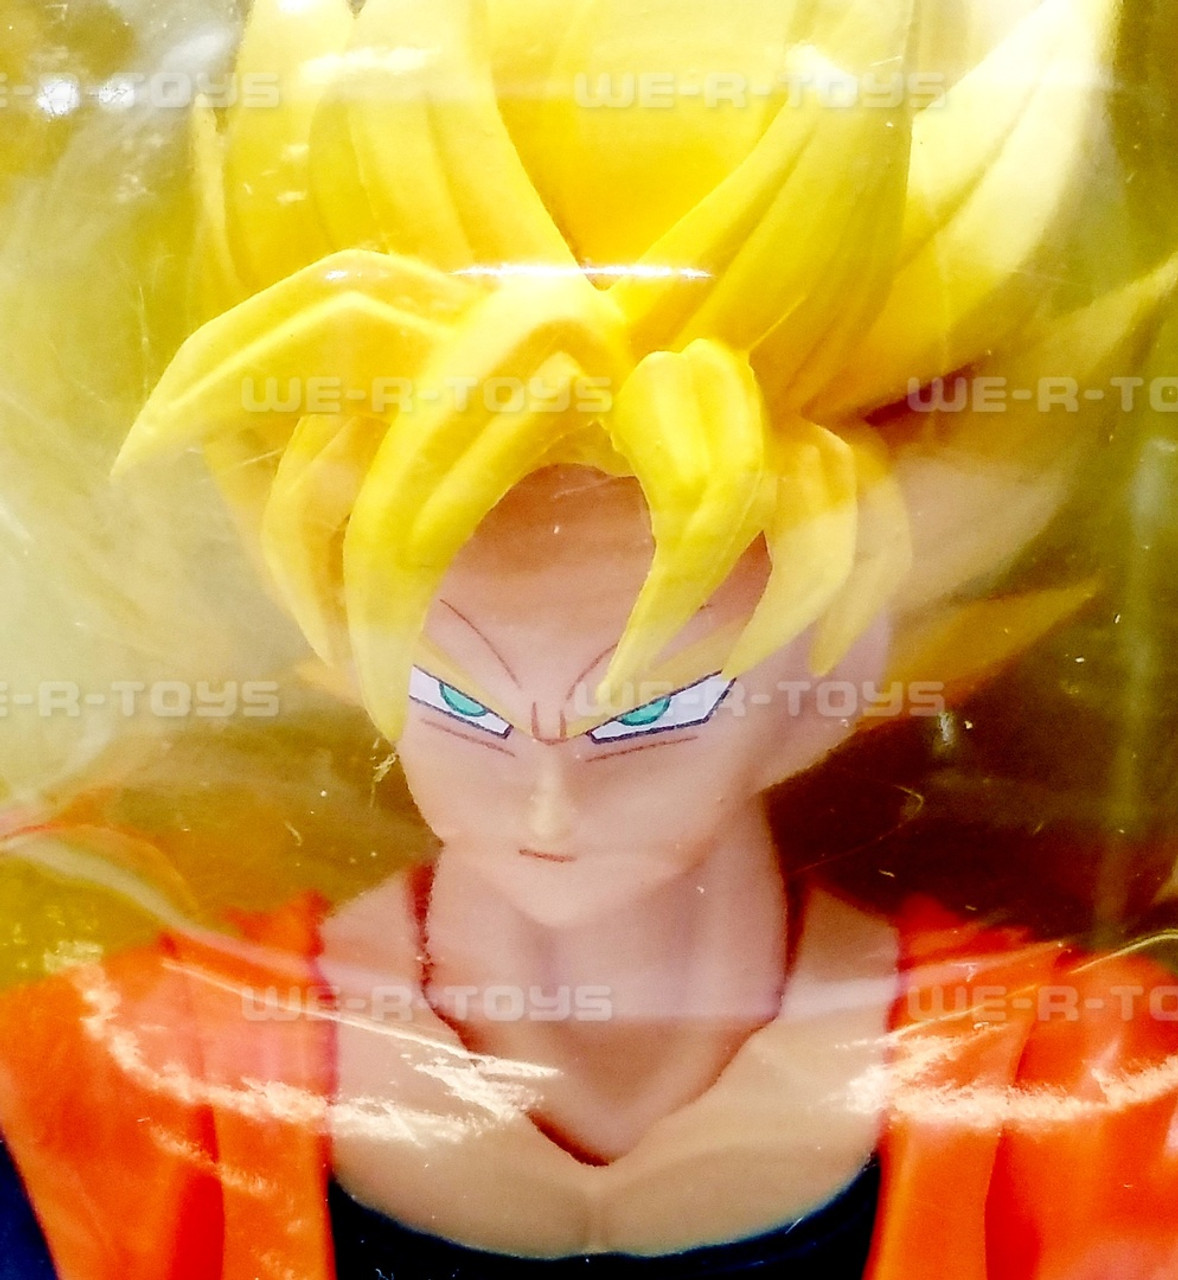  Tamashi Nations - Dragon Ball Z - Super Saiyan Full Power Son  Goku,Bandai Spirits S.H.Figuarts : Toys & Games